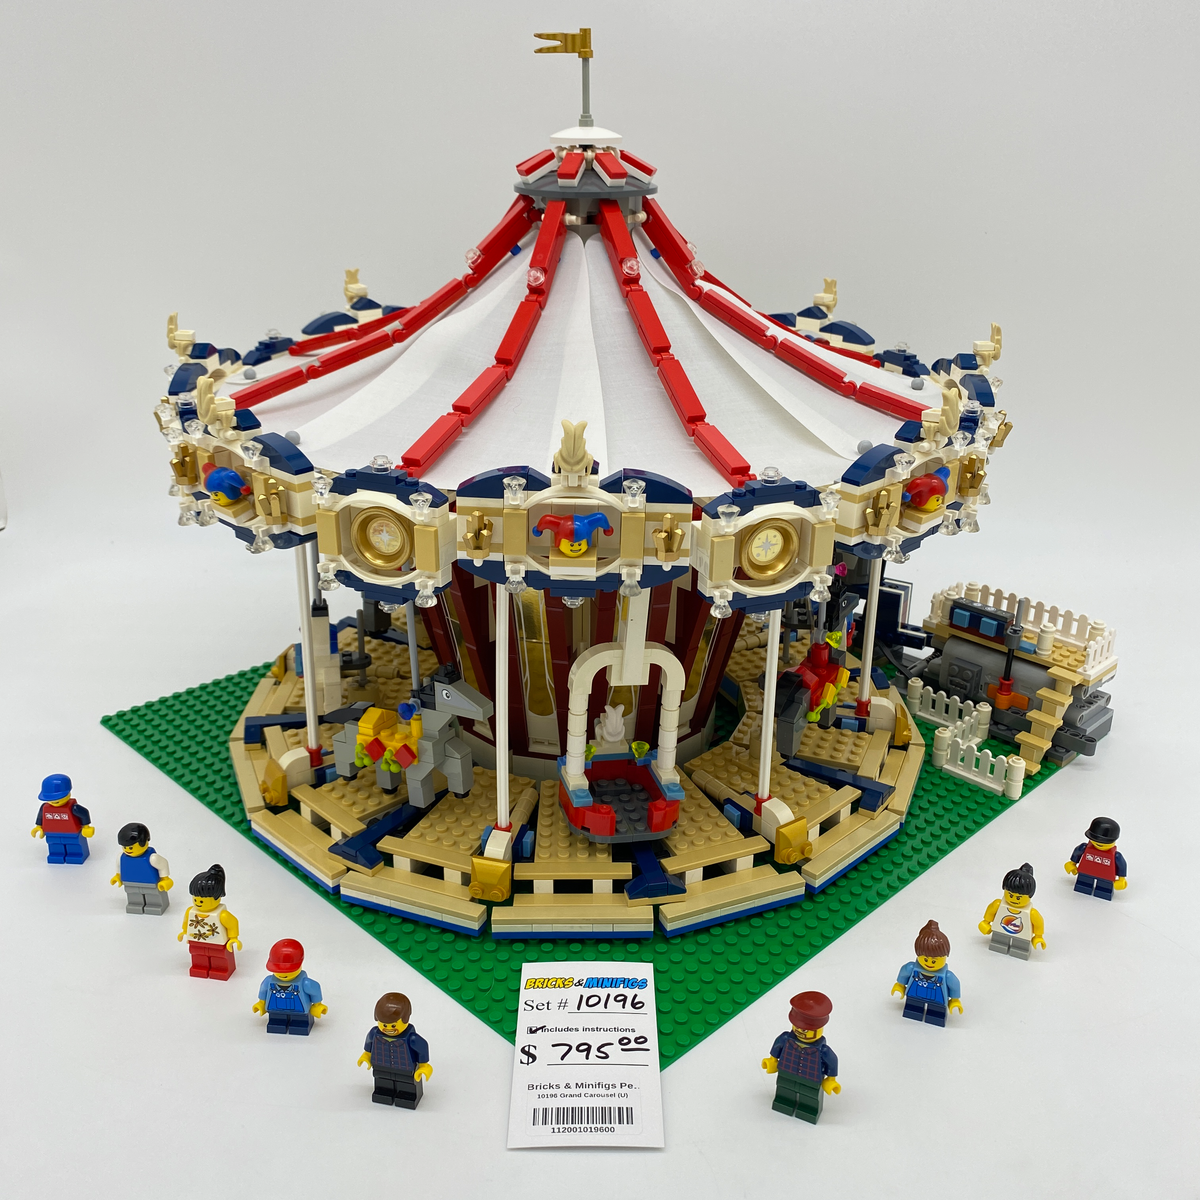 LEGO Advanced Models: Grand Carousel (10196) for sale online